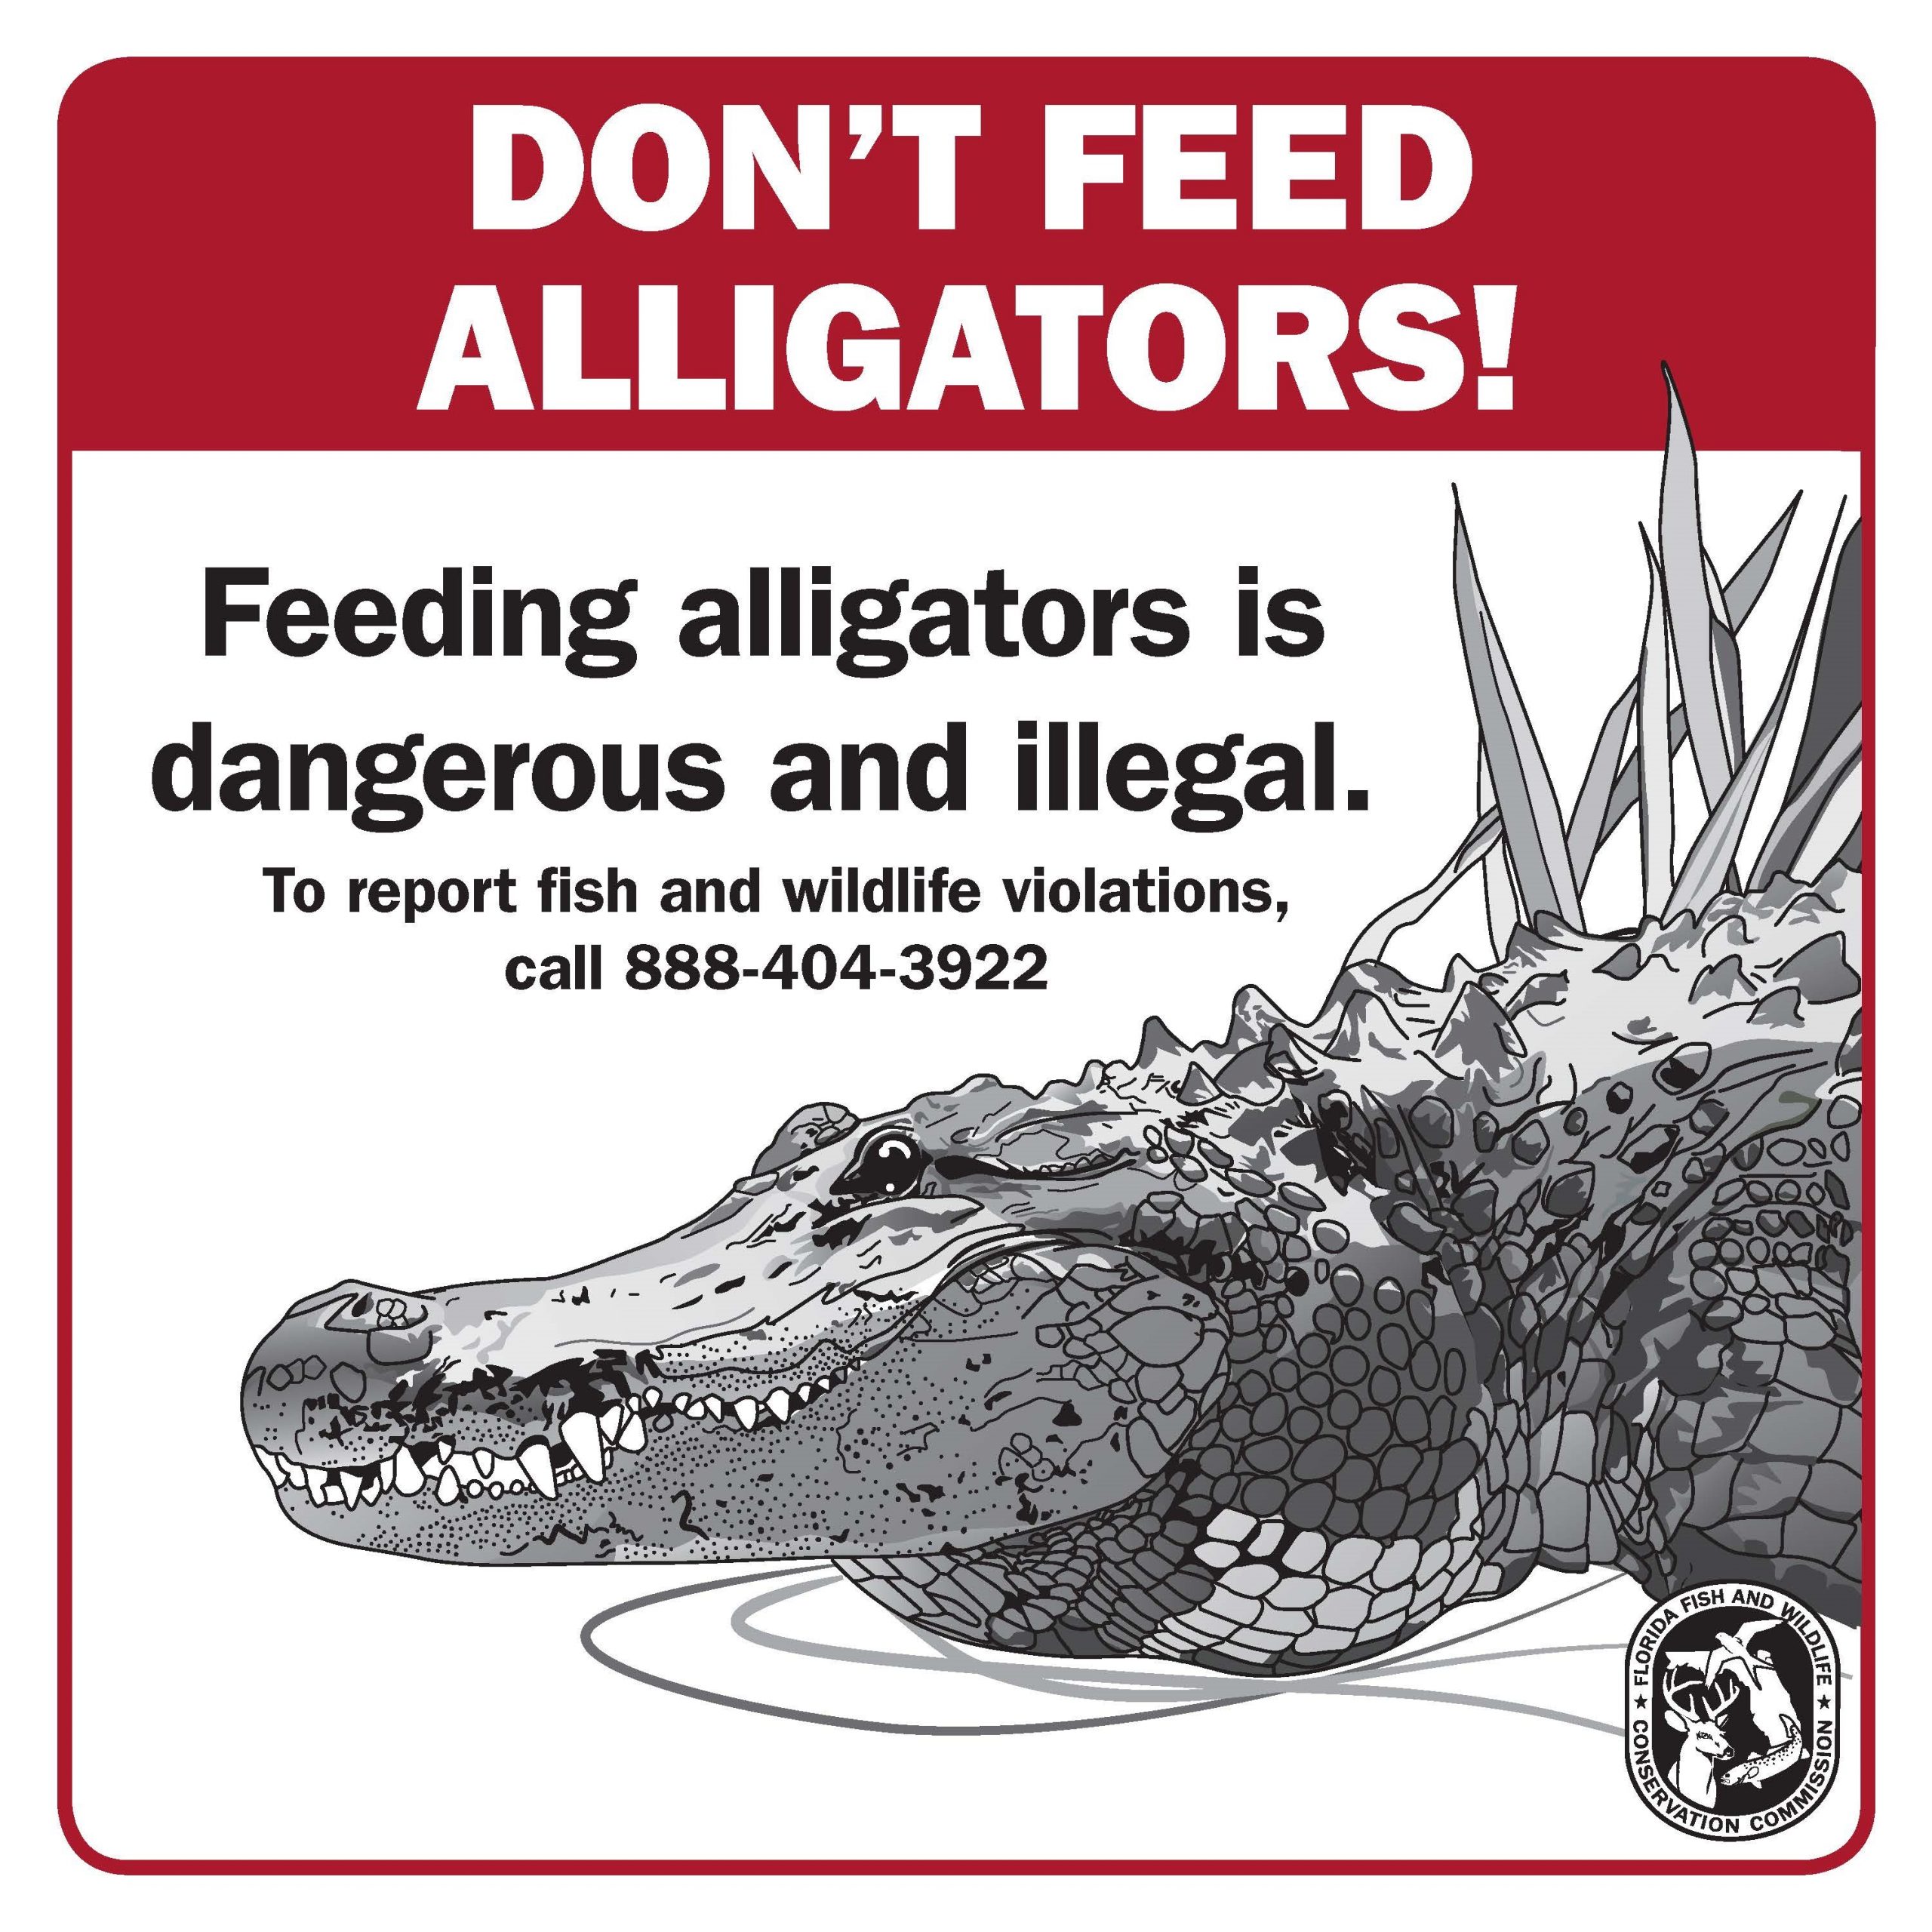 Don't Feed Alligators!